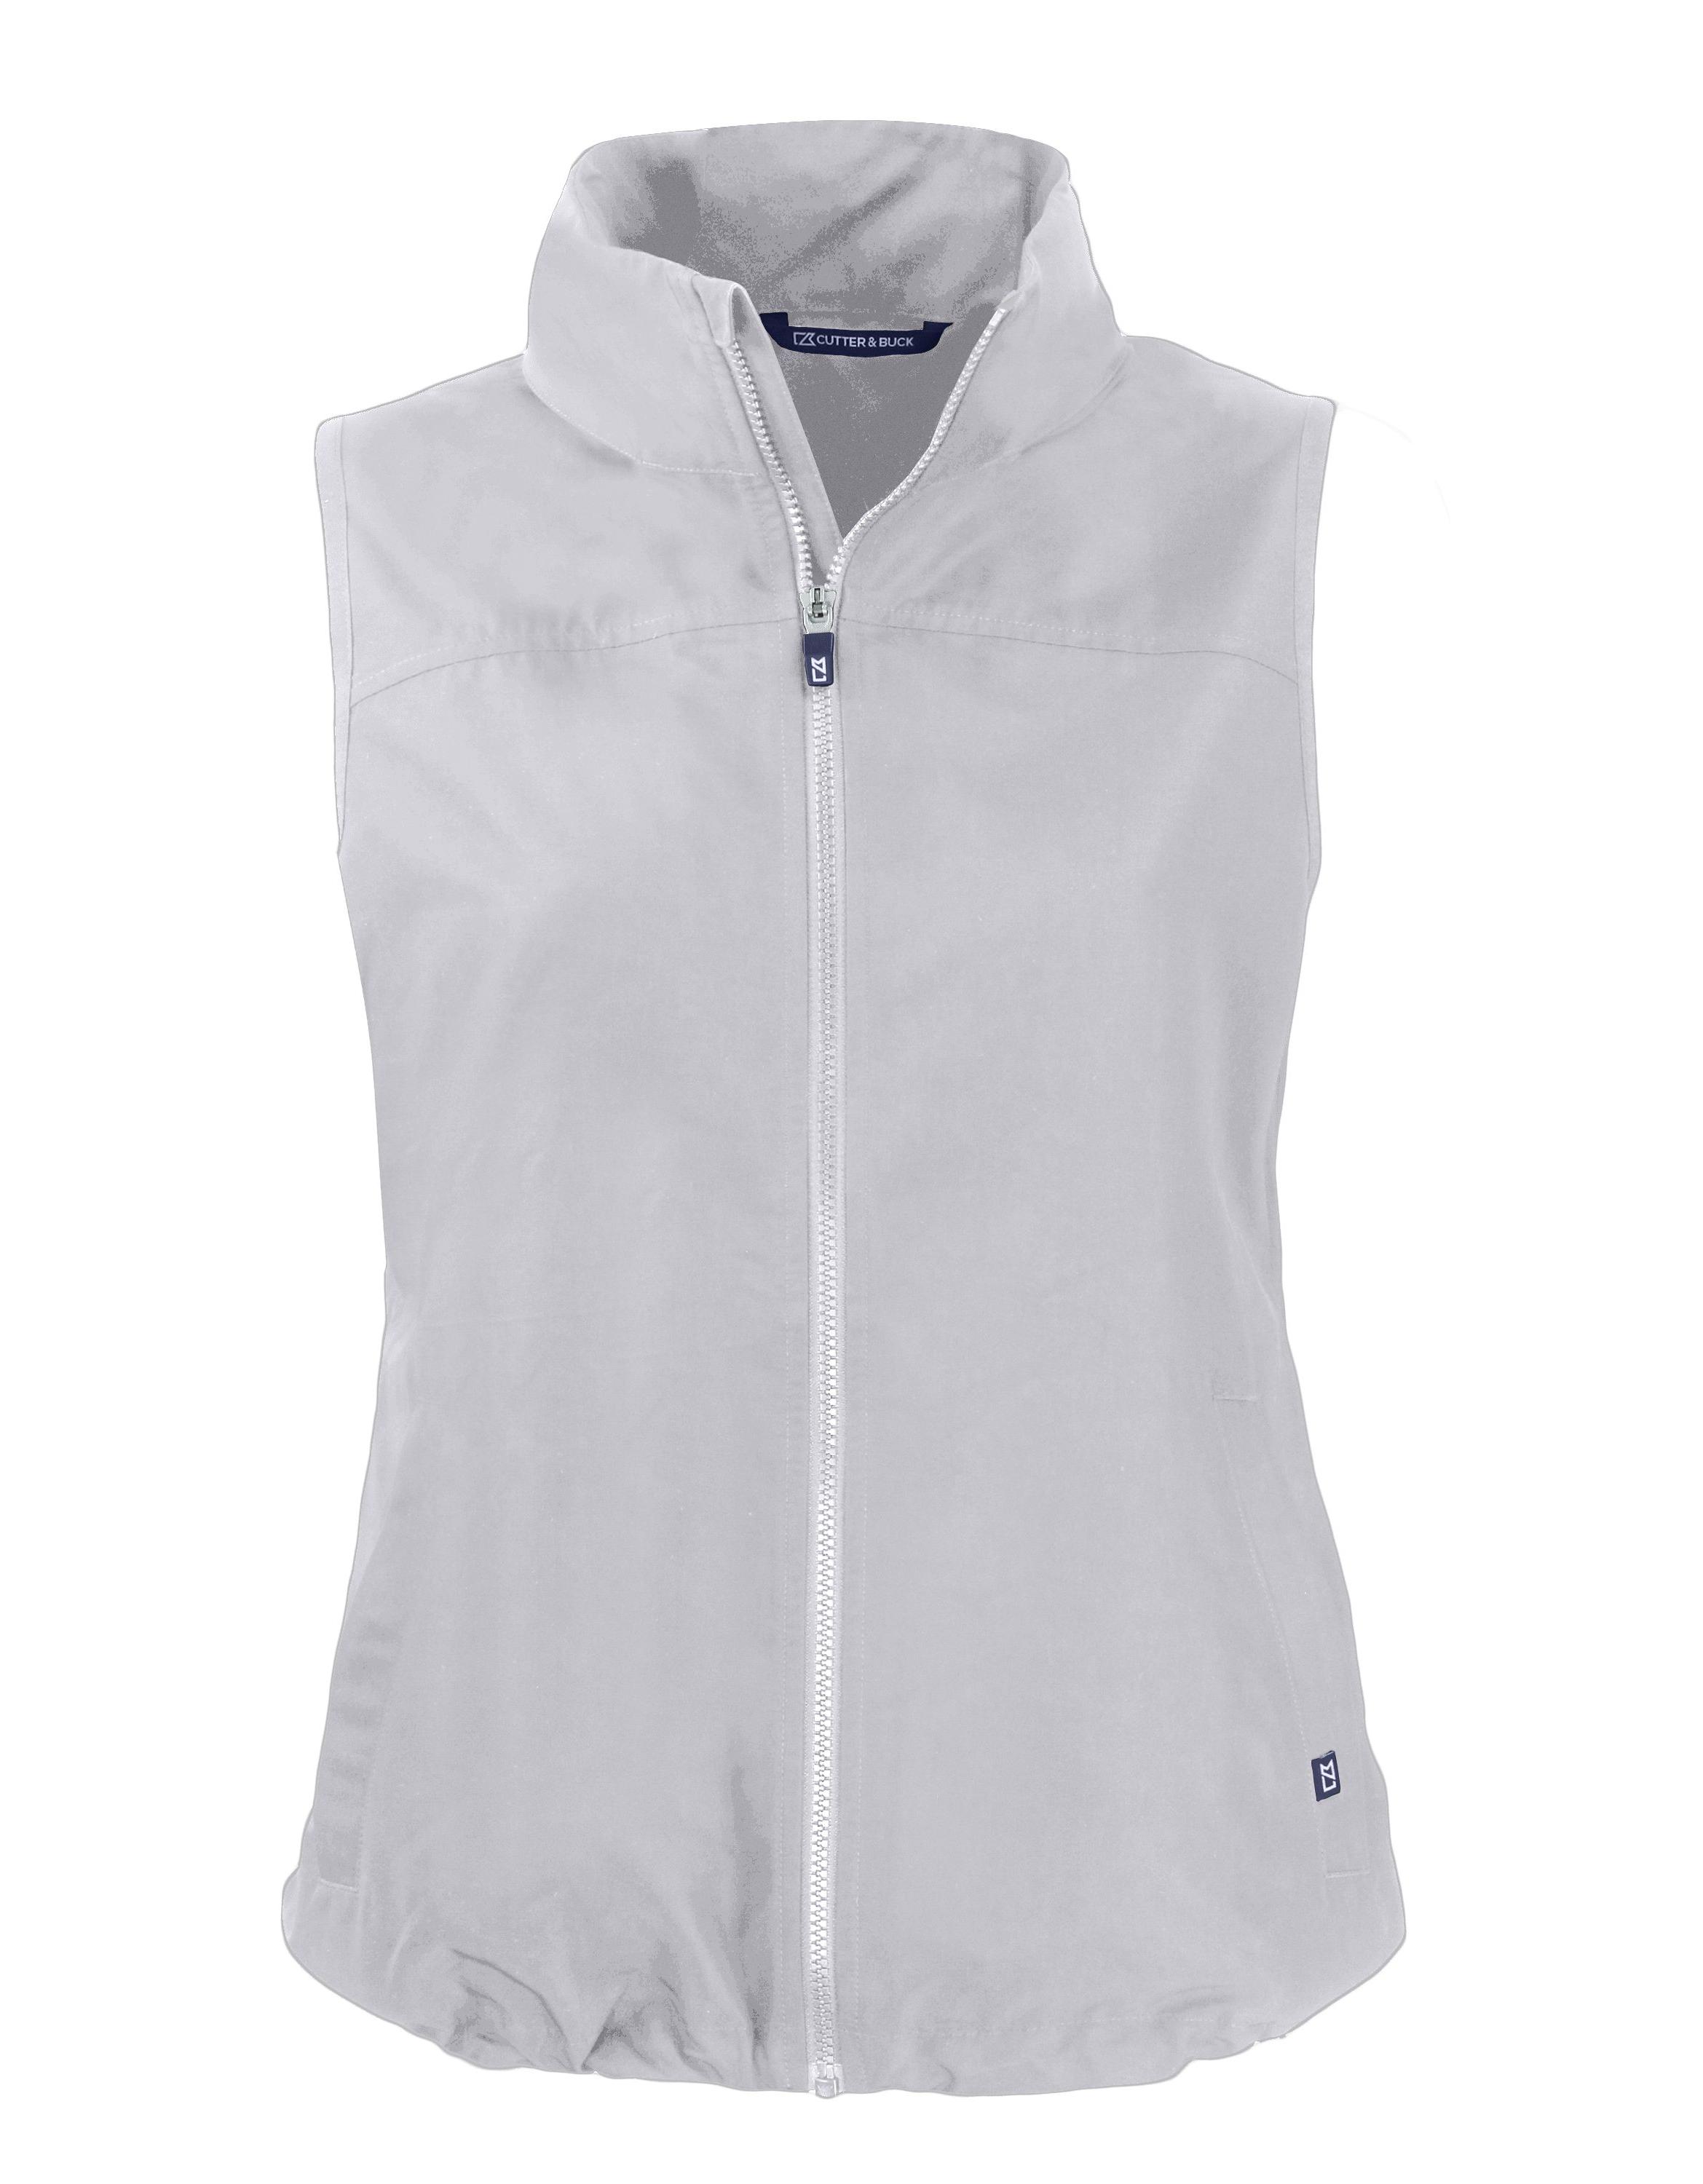 CUTTER & BUCK LCO00068 - Women's Charter Eco Full-Zip Vest